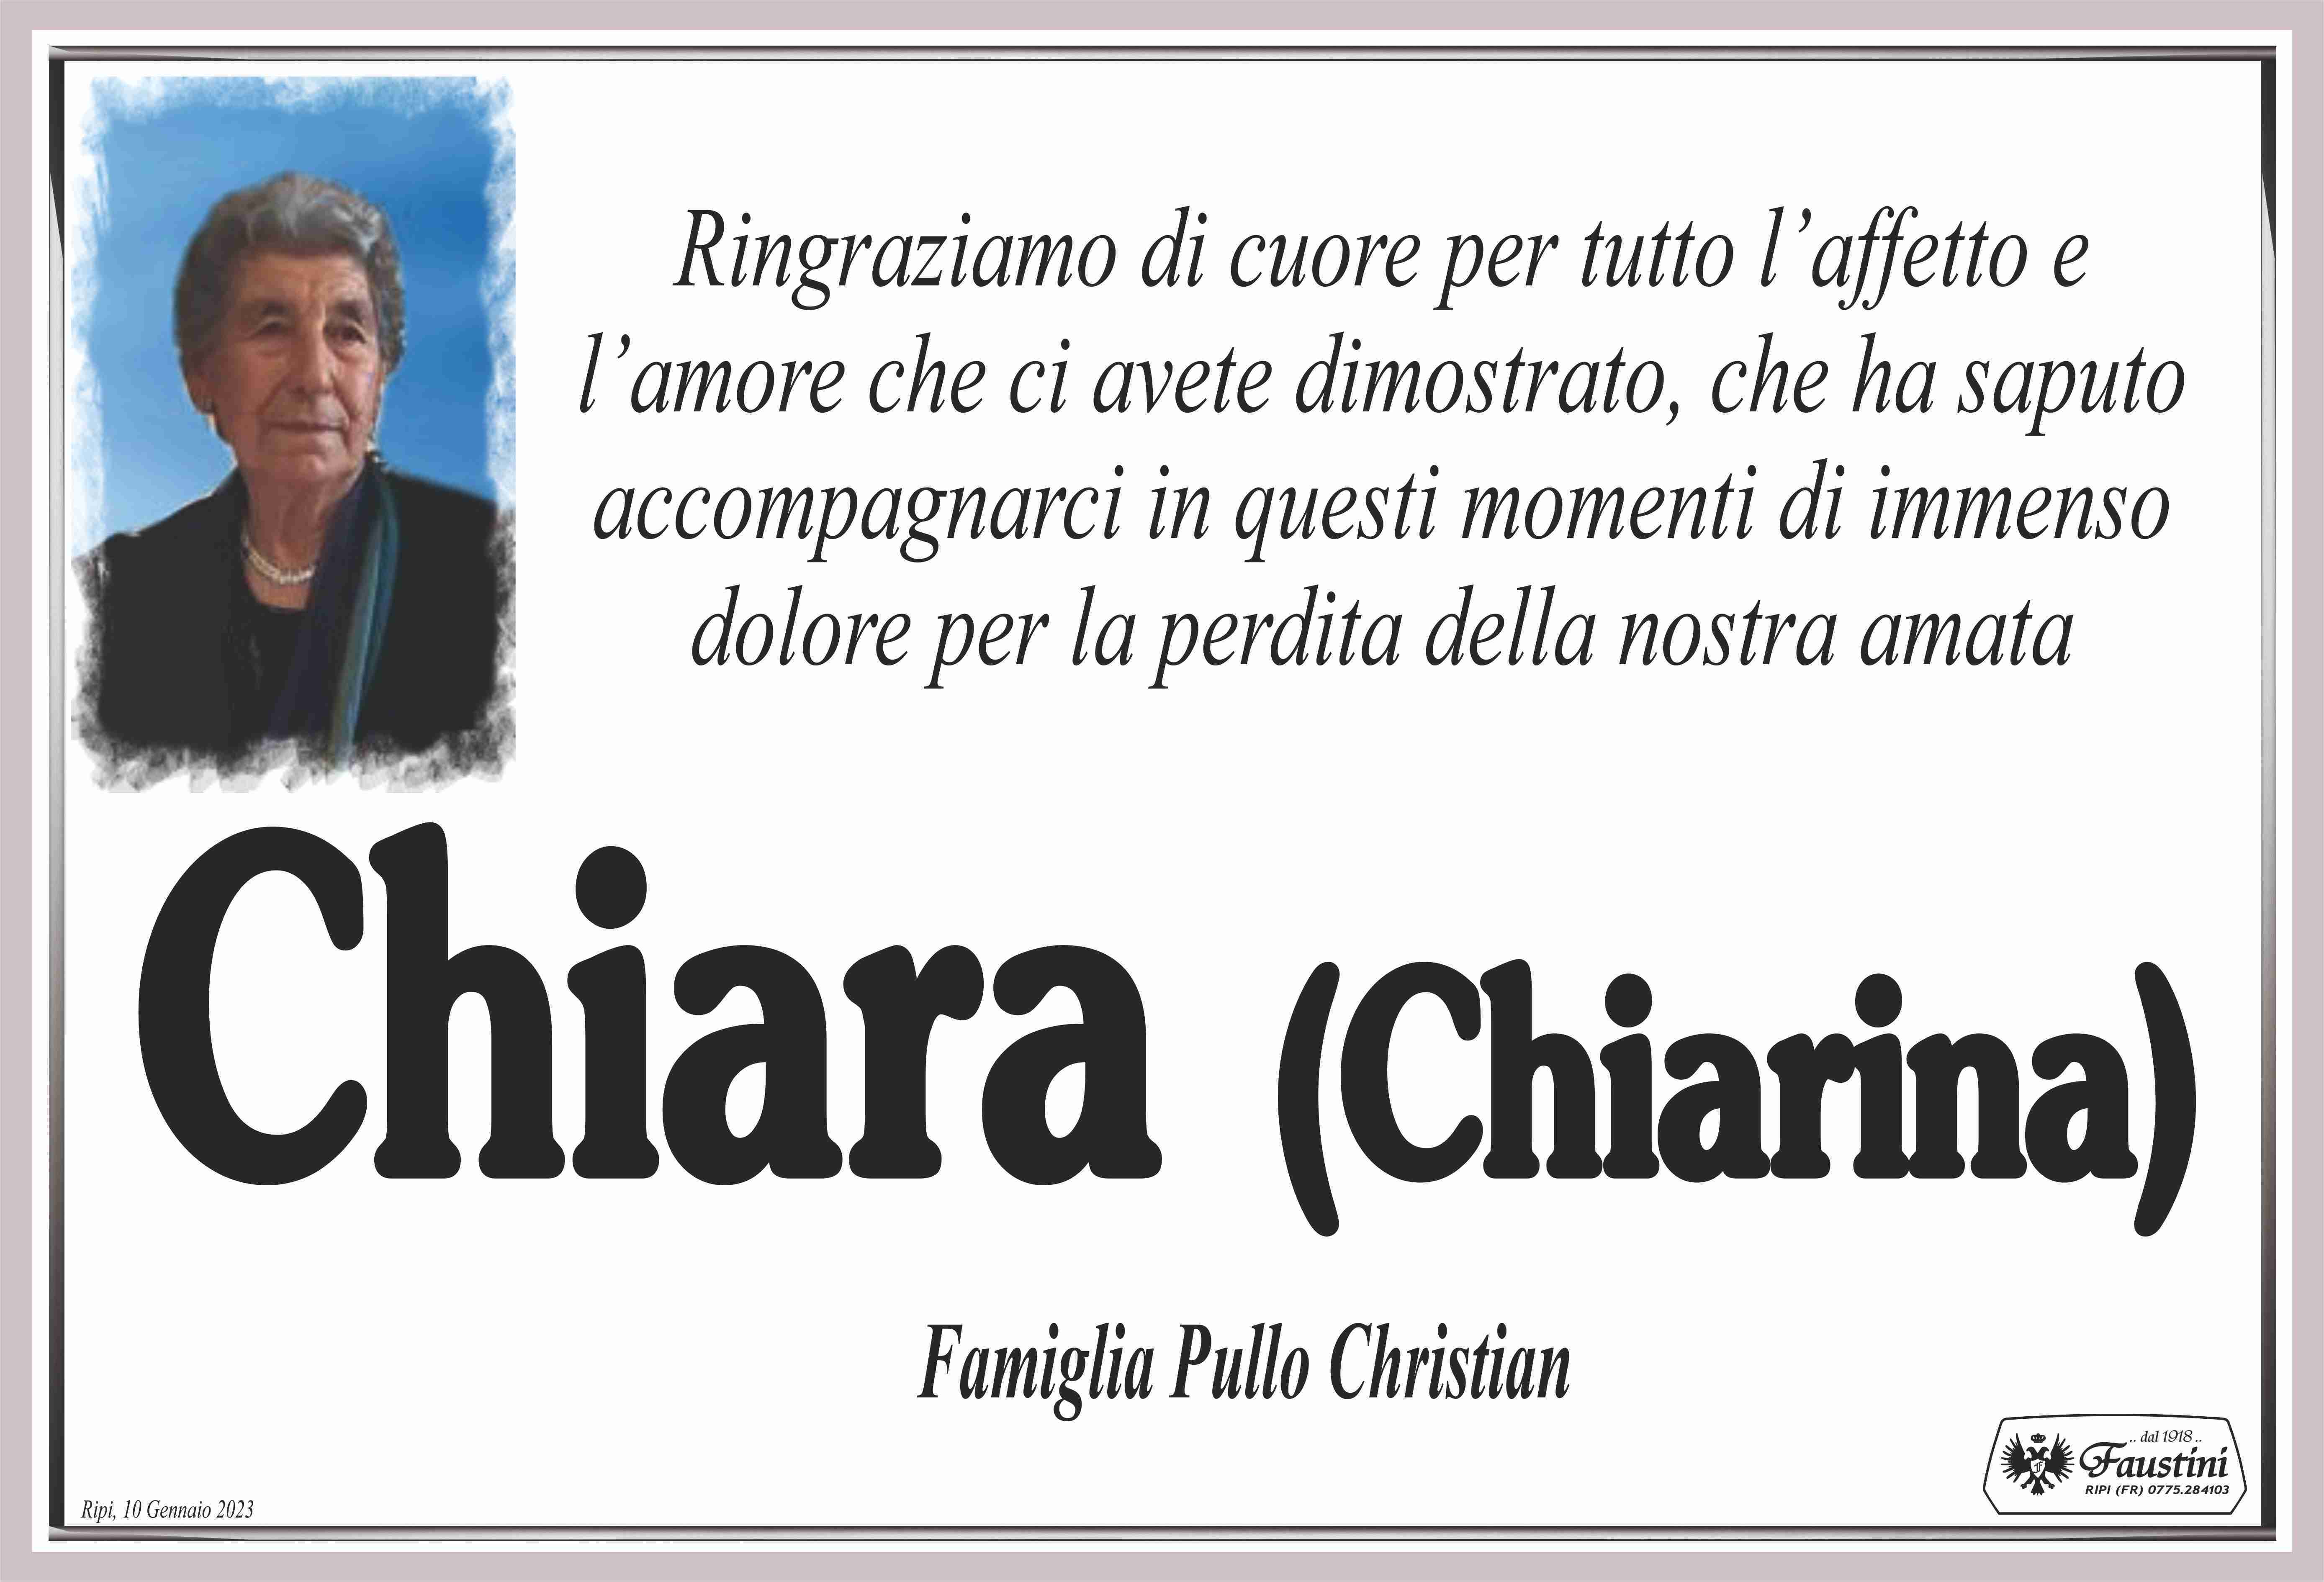 Chiara Lunghi "Chiarina"